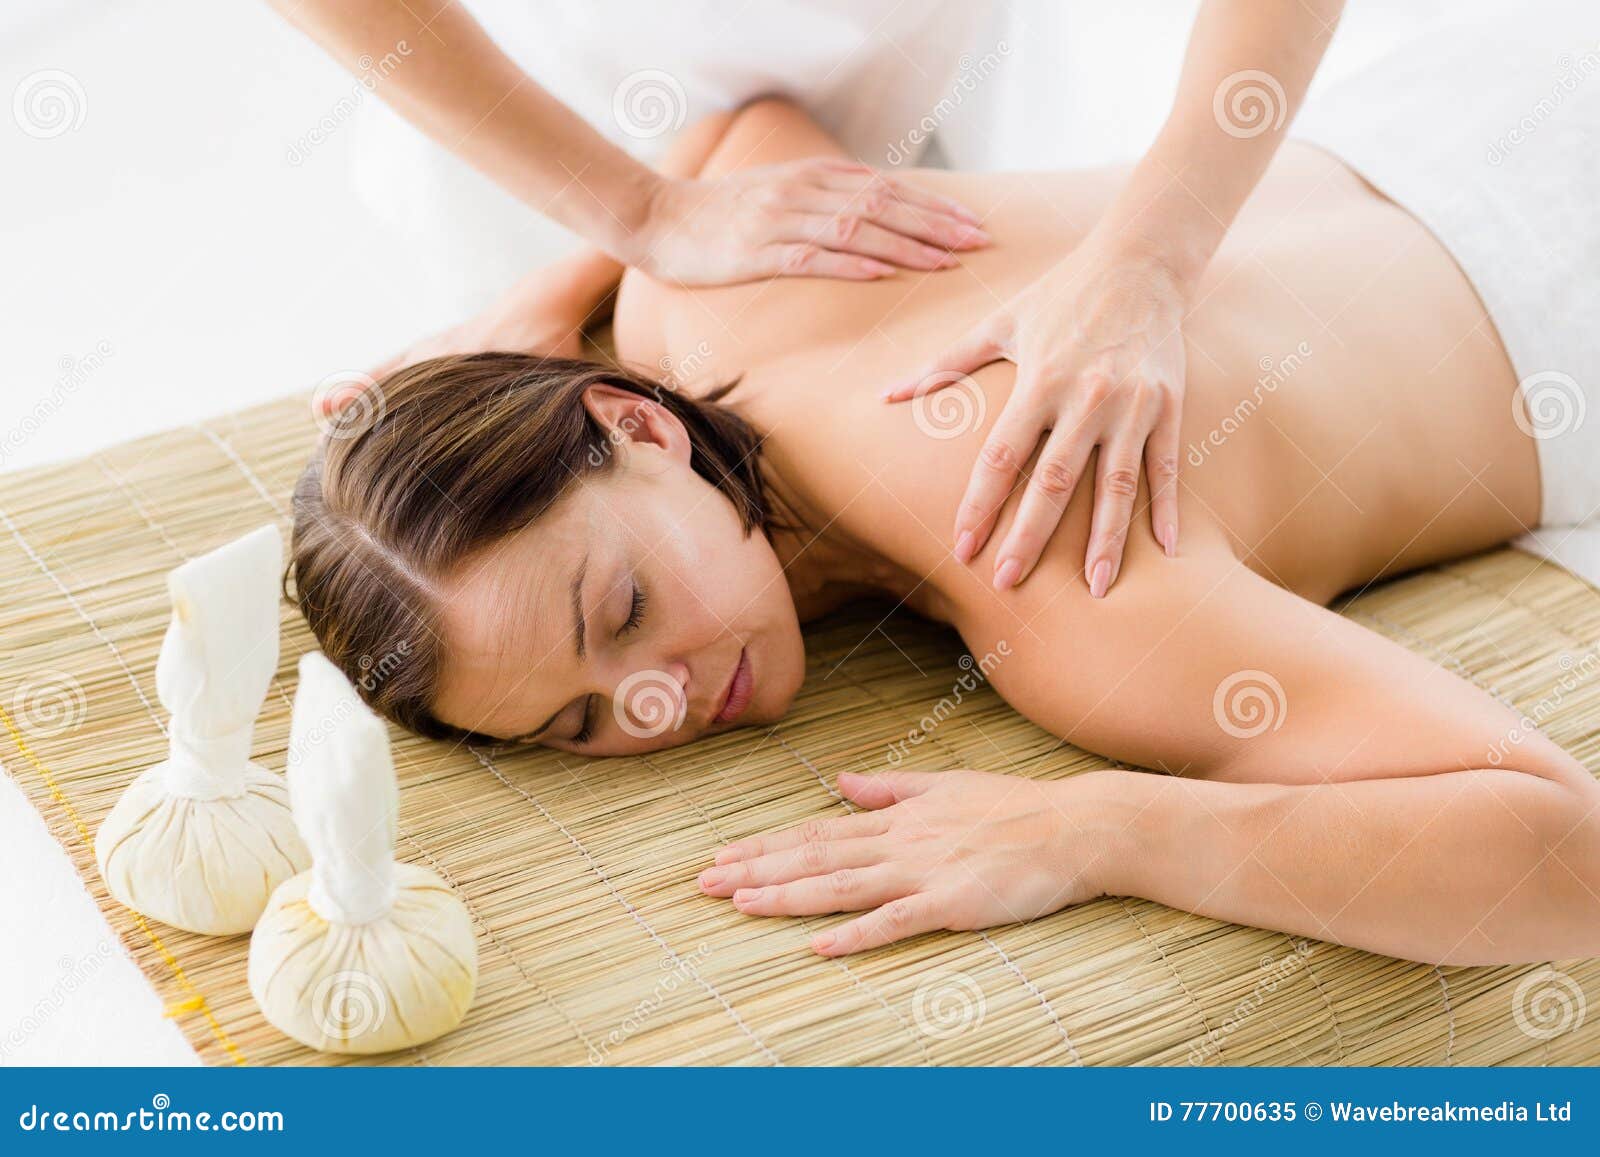 Naked women massaging